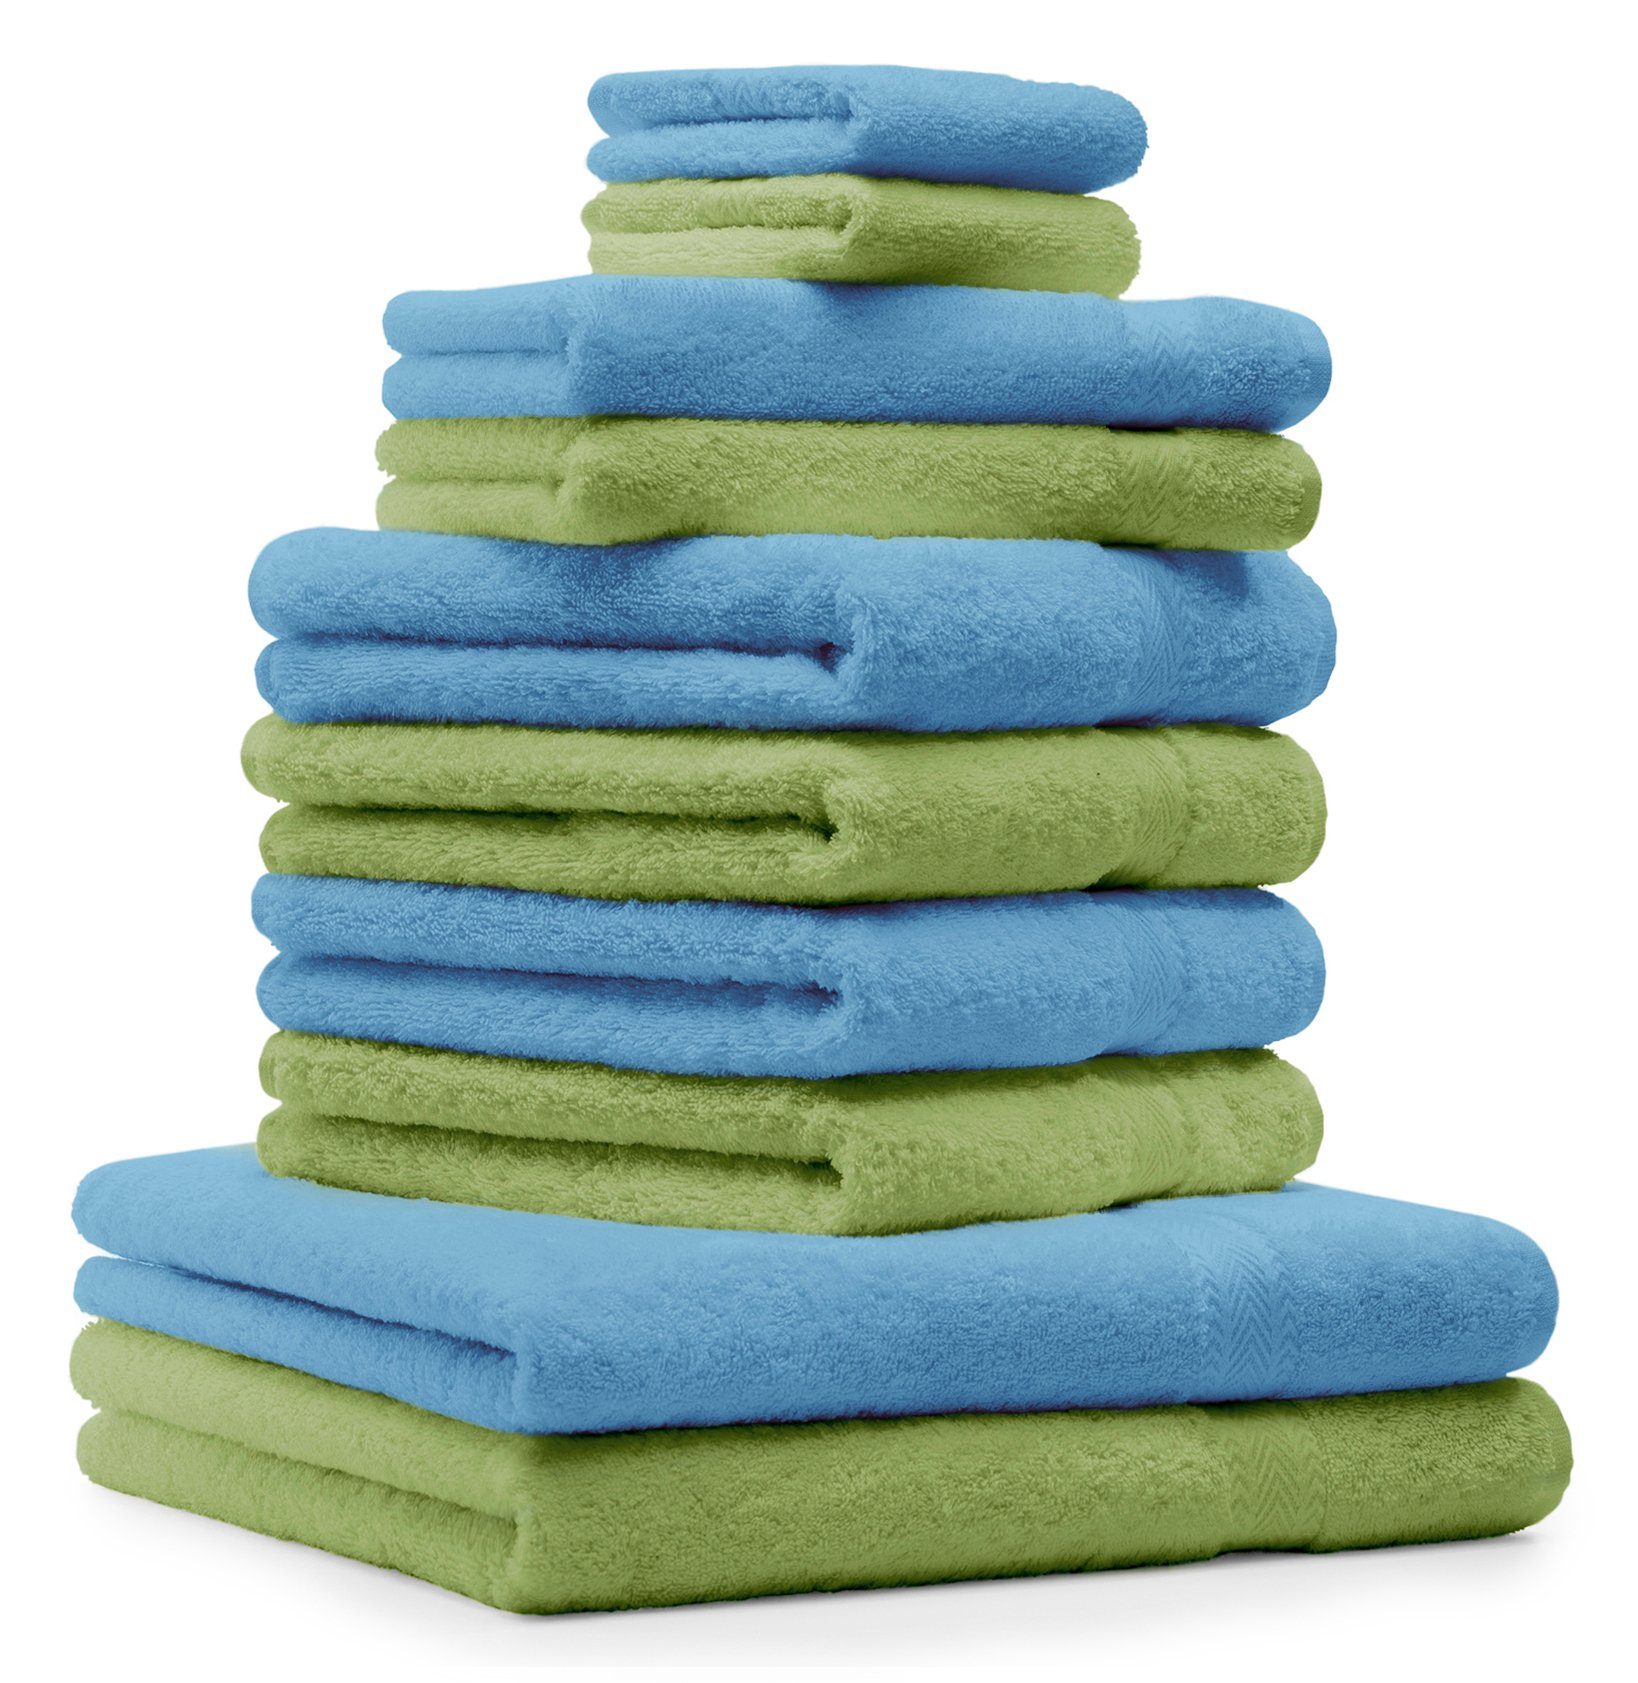 Betz Handtuch Set 10-TLG. Handtuch-Set Premium 100% Baumwolle 2 Duschtücher 4 Handtücher 2 Gästetücher 2 Waschhandschuhe Farbe Apfel Grün & Hell Blau, 100% Baumwolle, (Set, 10-tlg)